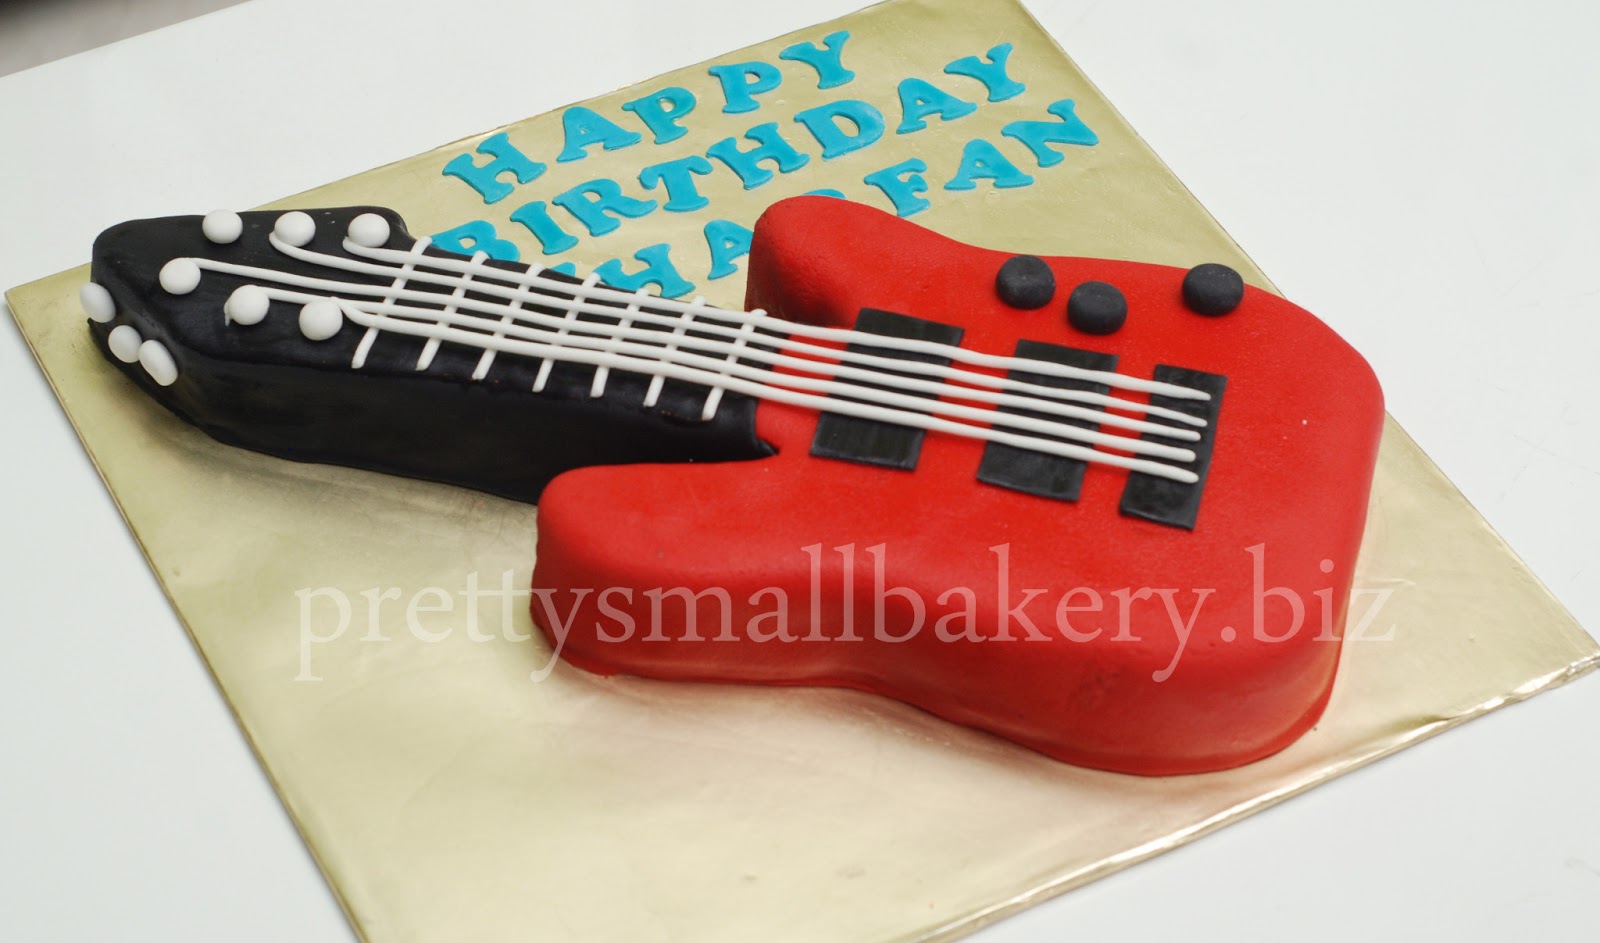 kek birthday guitar untuk zhafran Prettysmallbakery